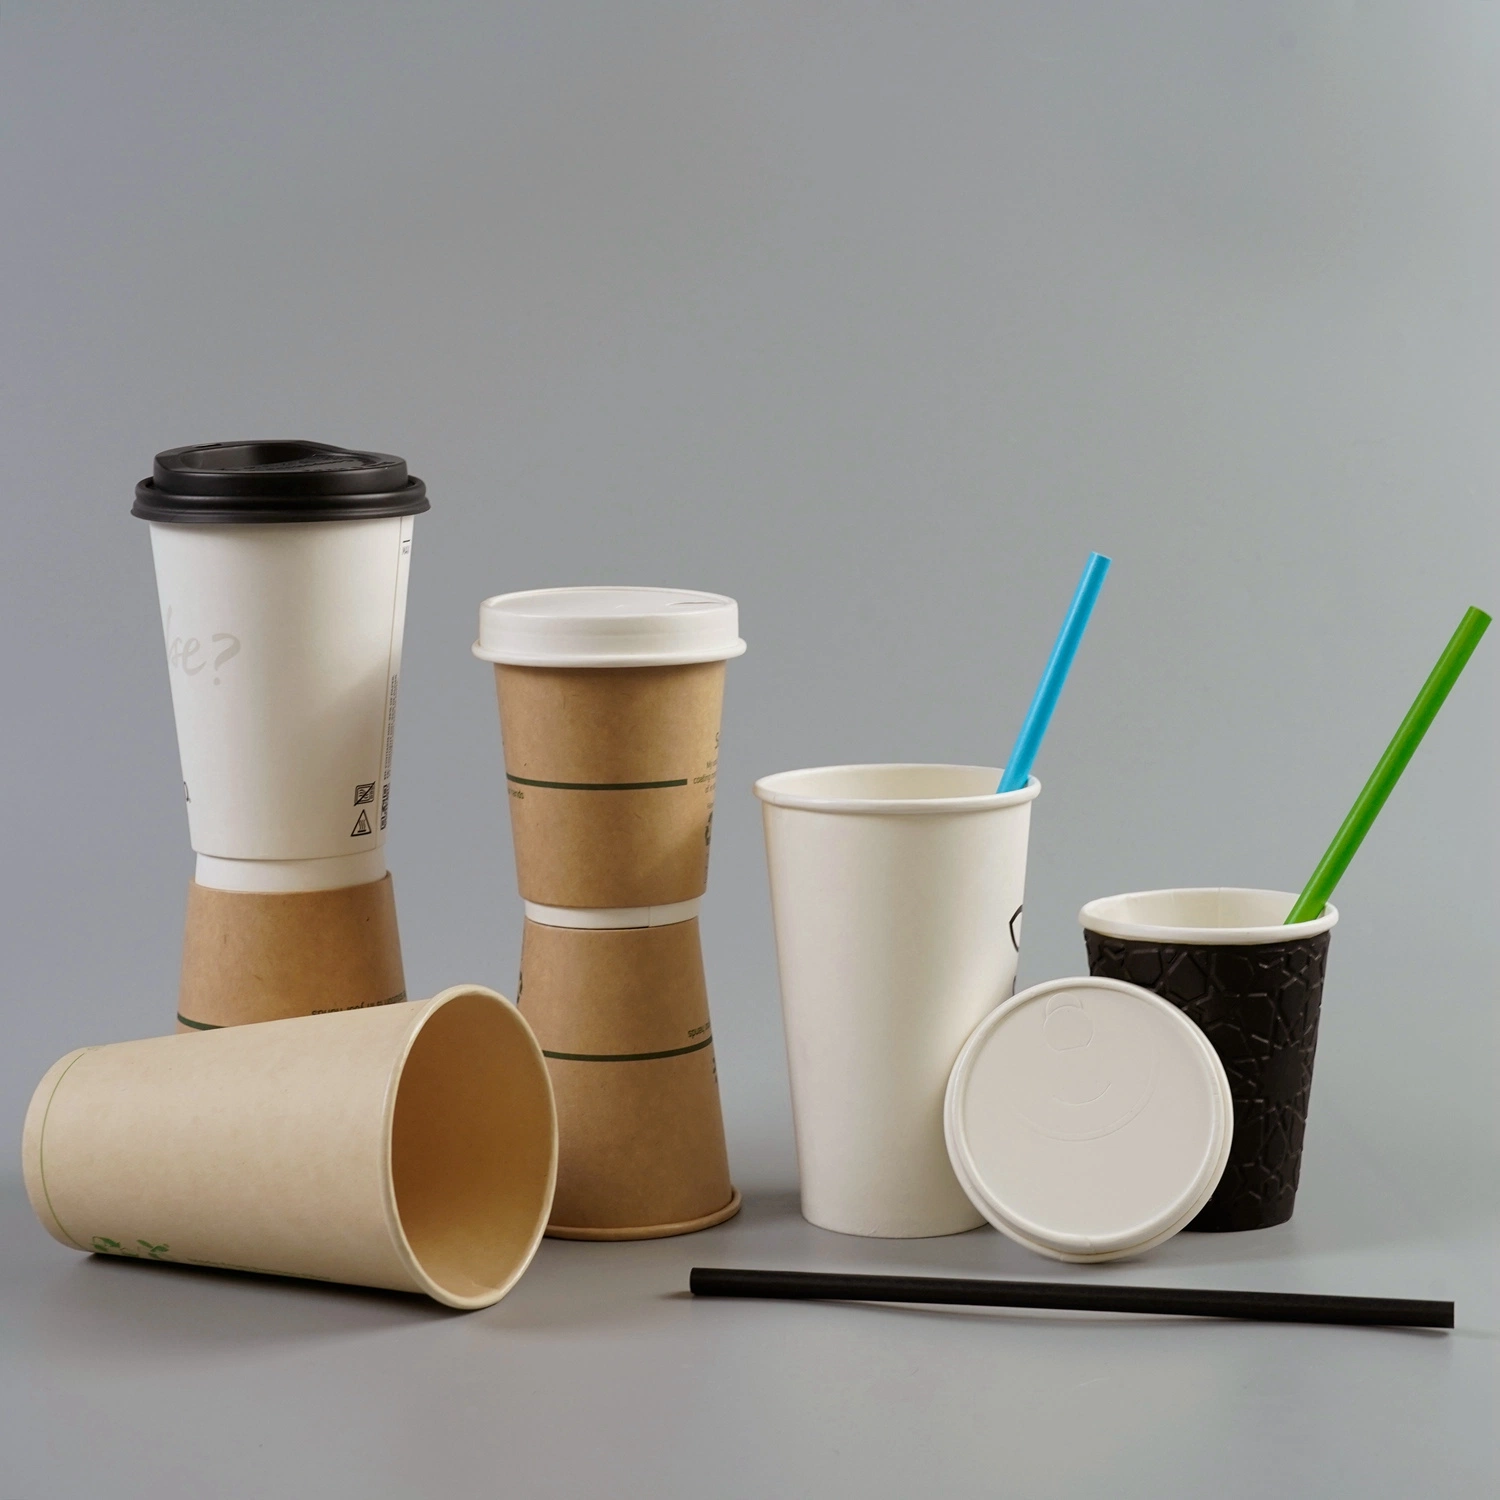 Biodegradable Cup Market'